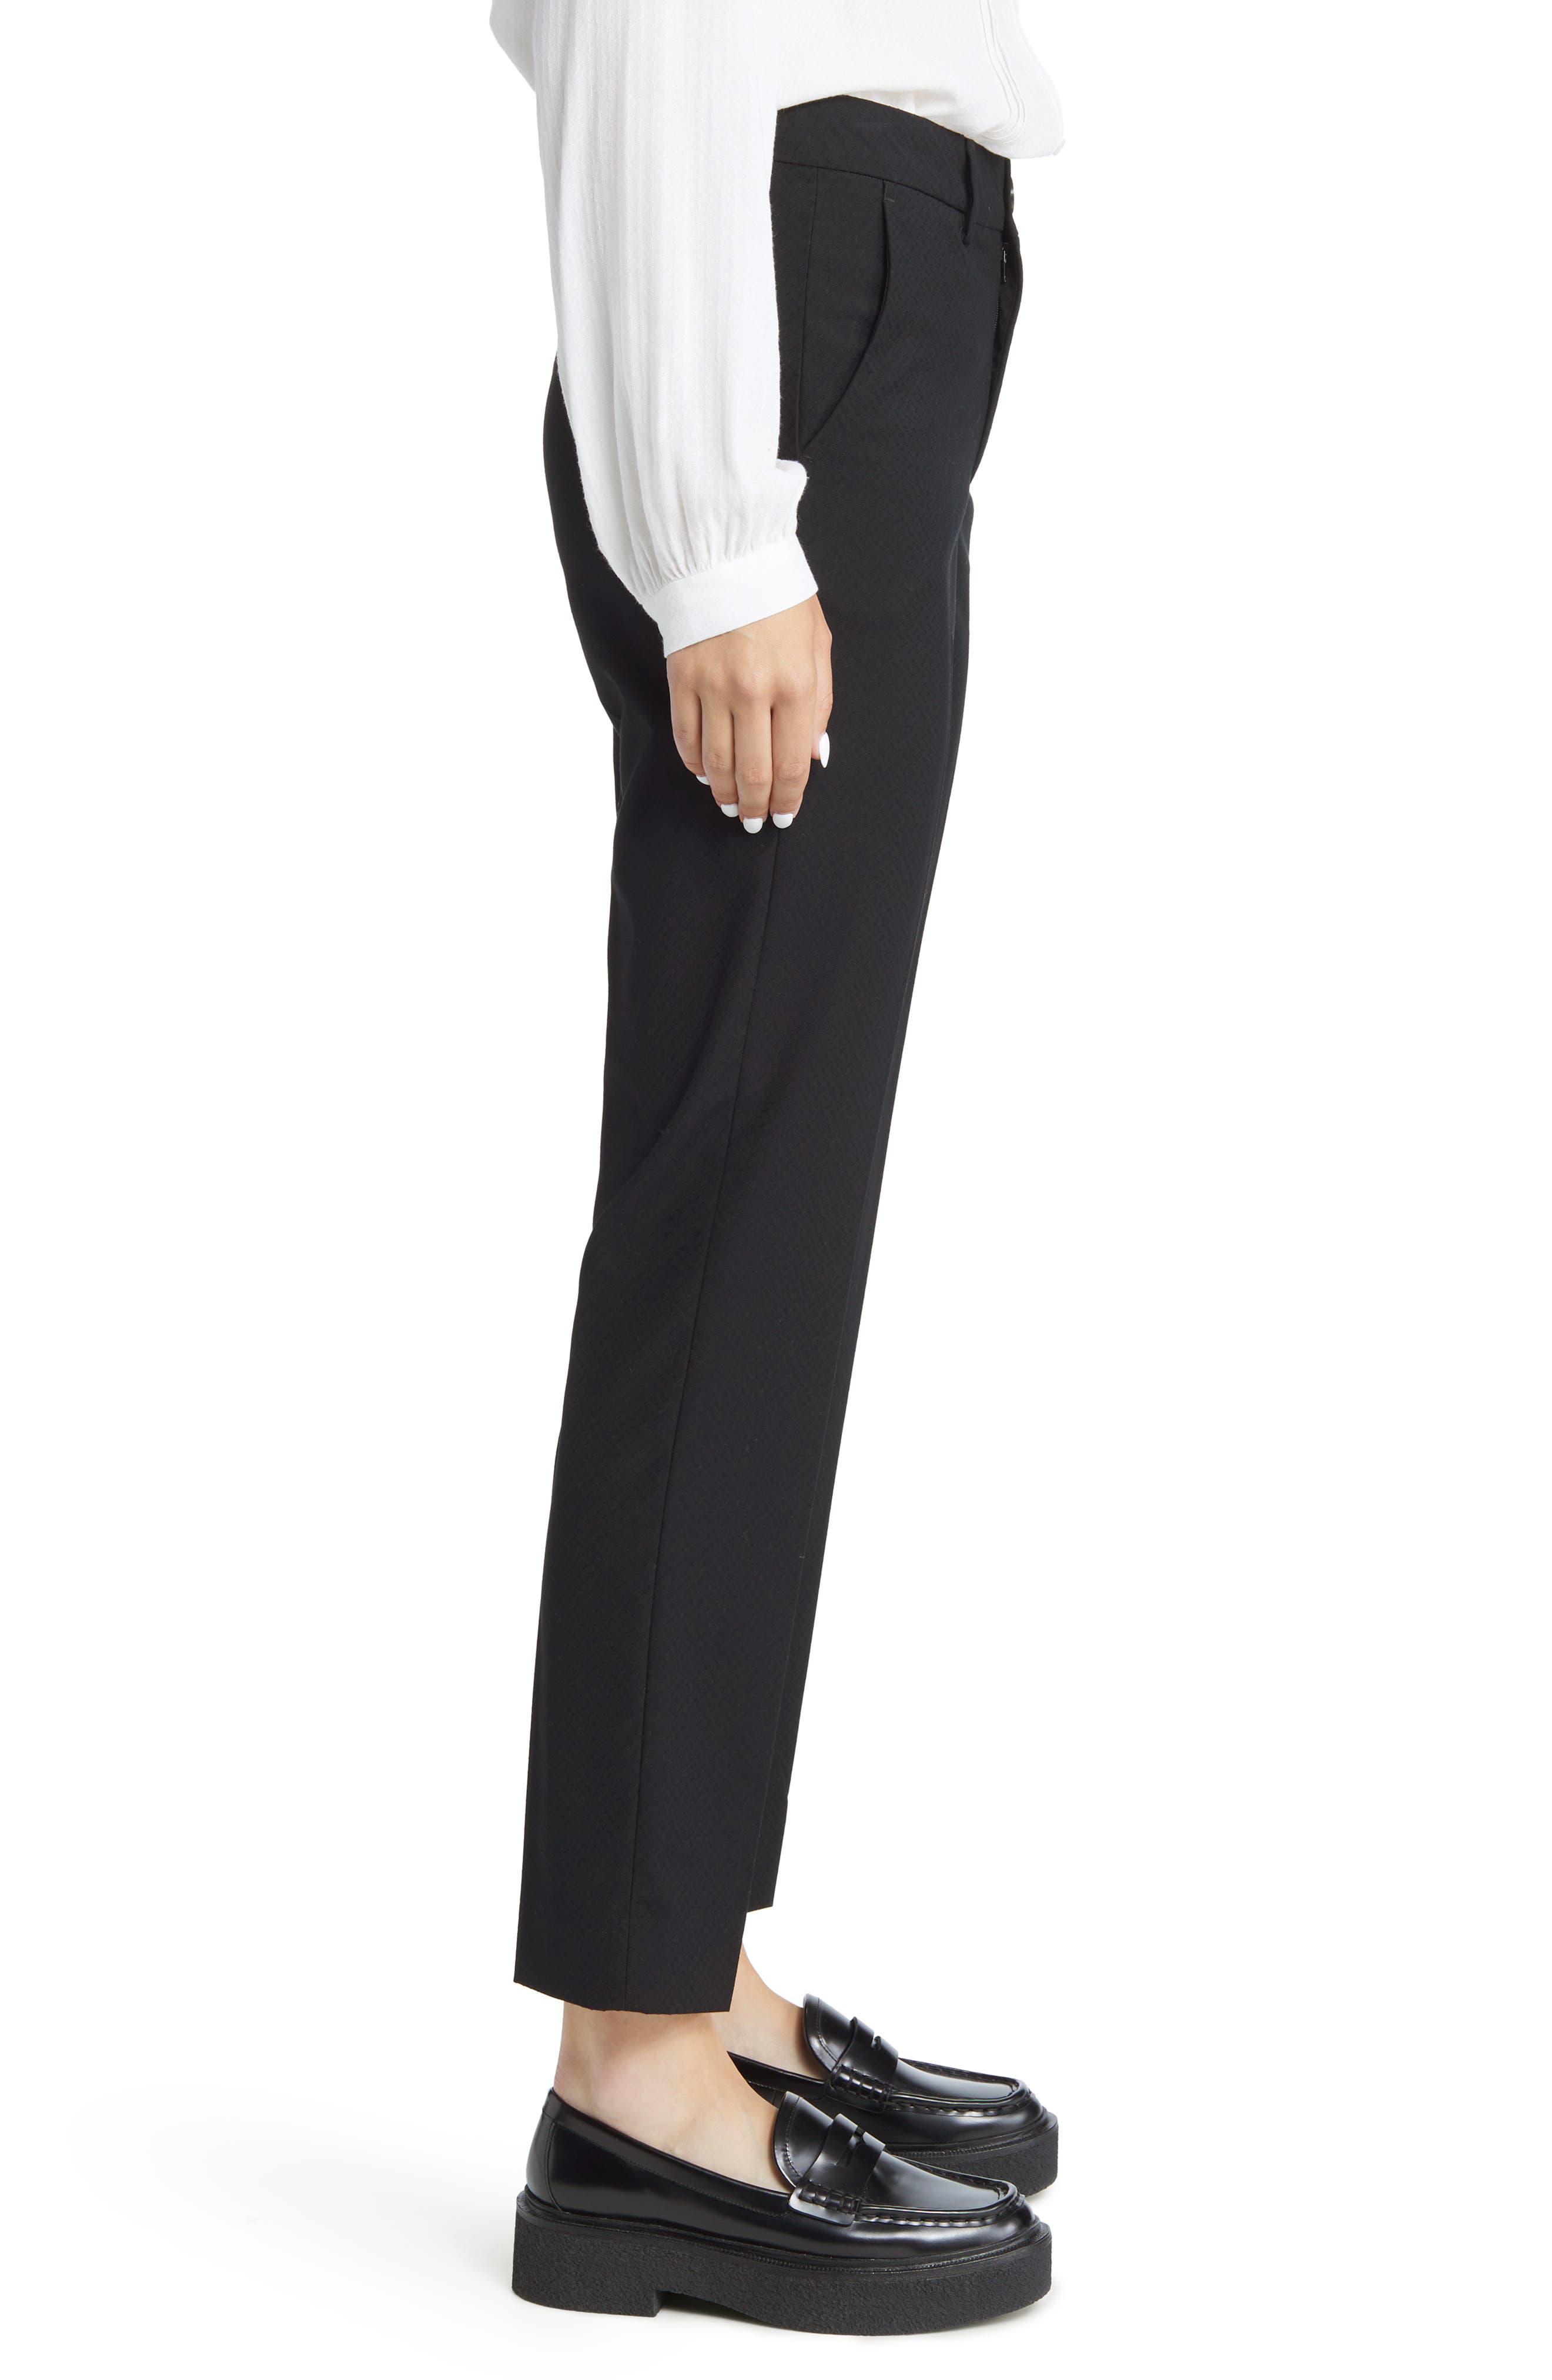 Scotch & SodaScotch & Soda Lowry' Tailored Slim Fit Classic Pant Short Femme Marque  